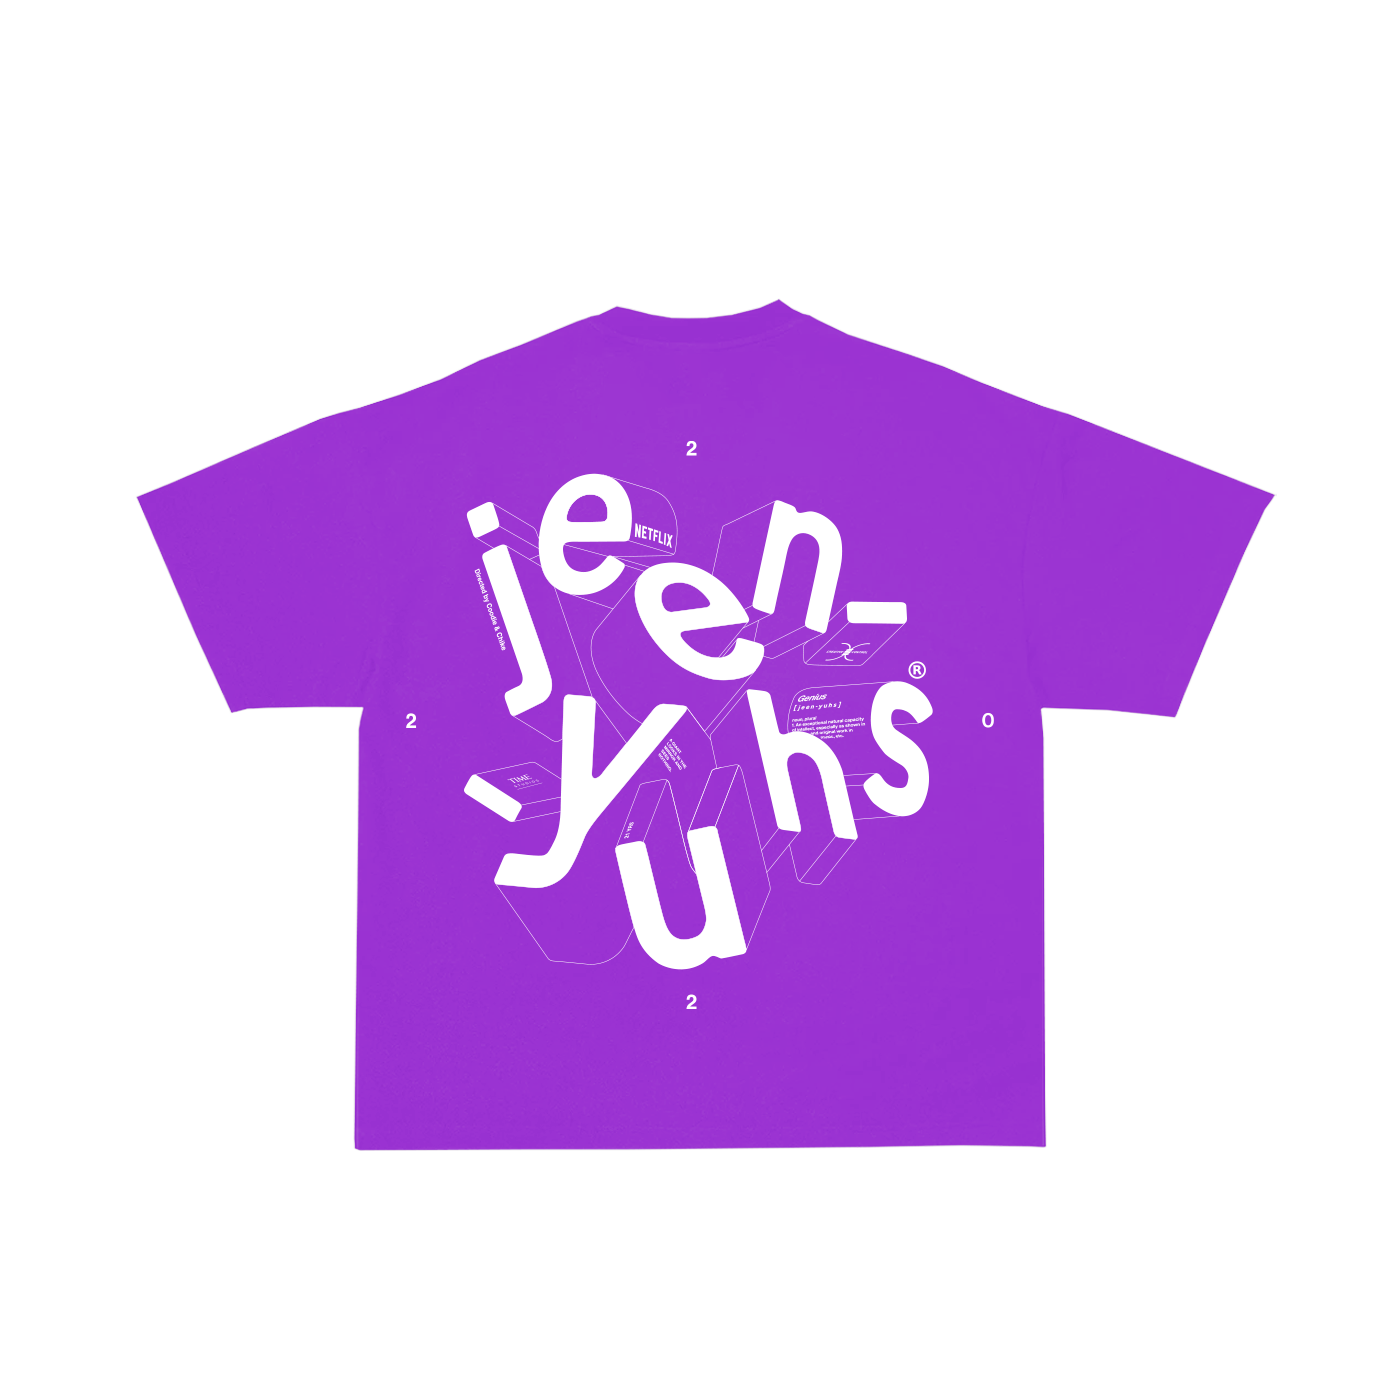 jeen-yuhs 3D Short Sleeve T-shirt Purple